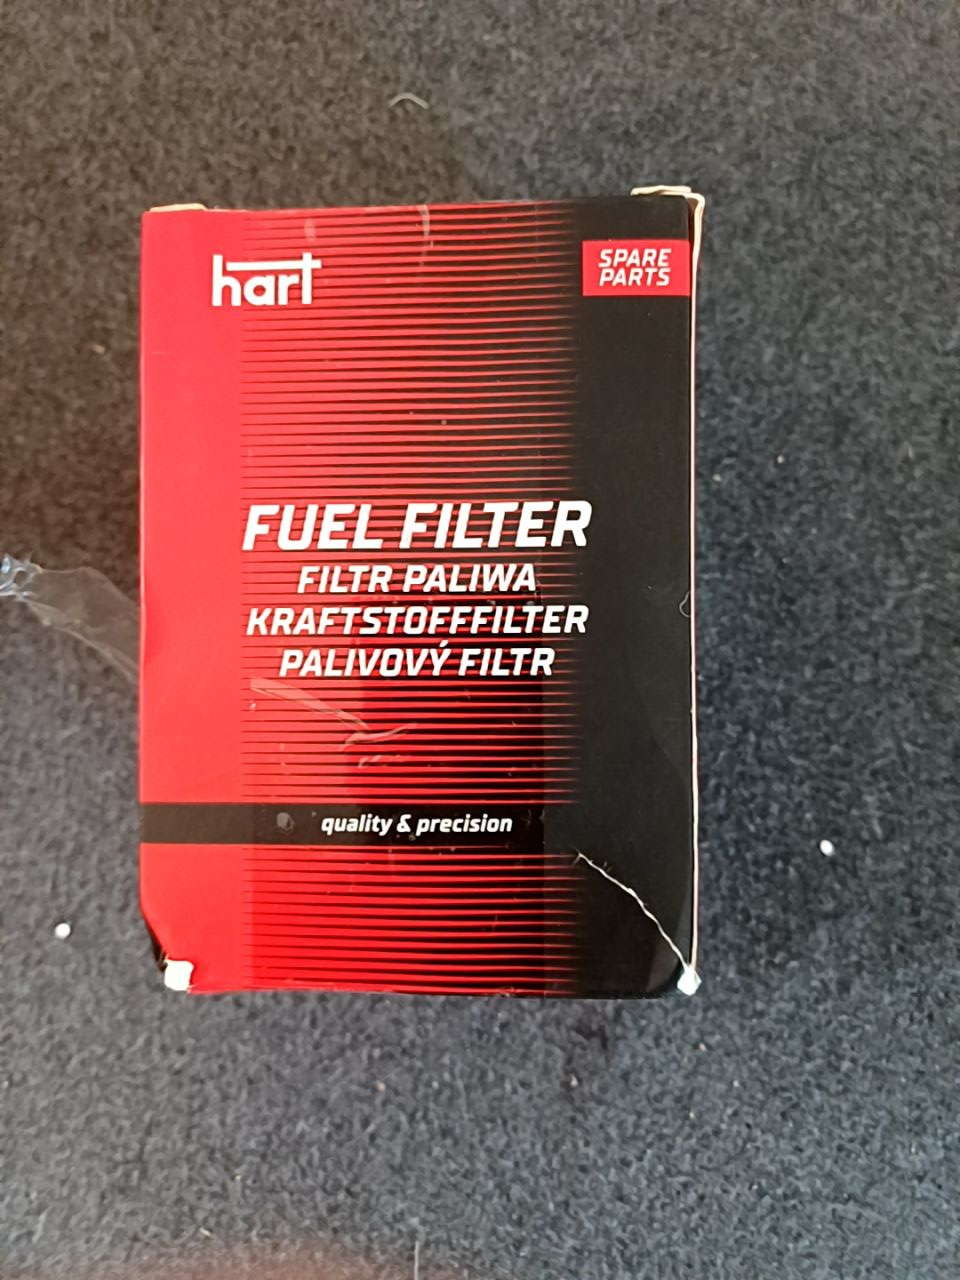 Palivový filtr Hart 352122